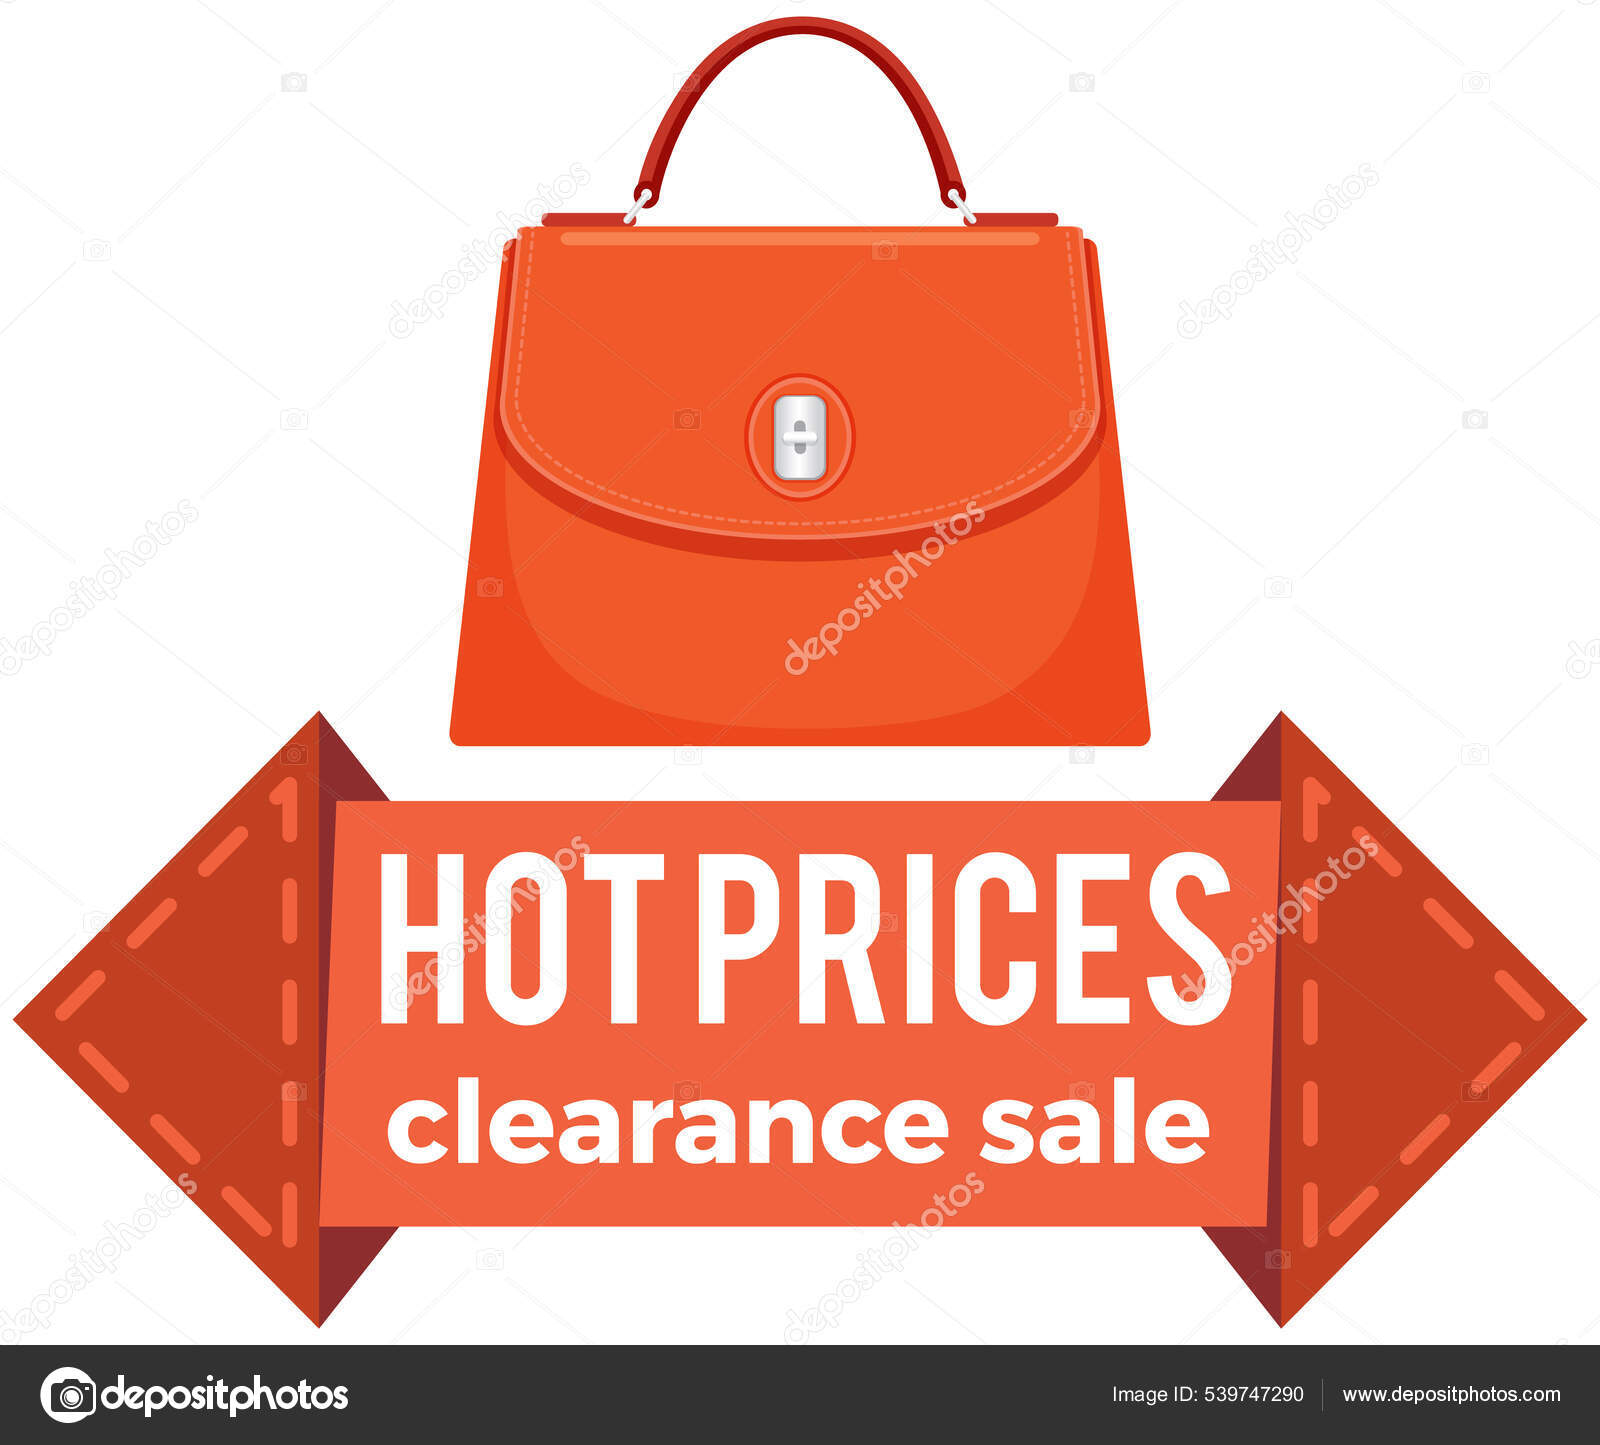 https://st.depositphotos.com/2419757/53974/v/1600/depositphotos_539747290-stock-illustration-hot-price-sale-poster-with.jpg